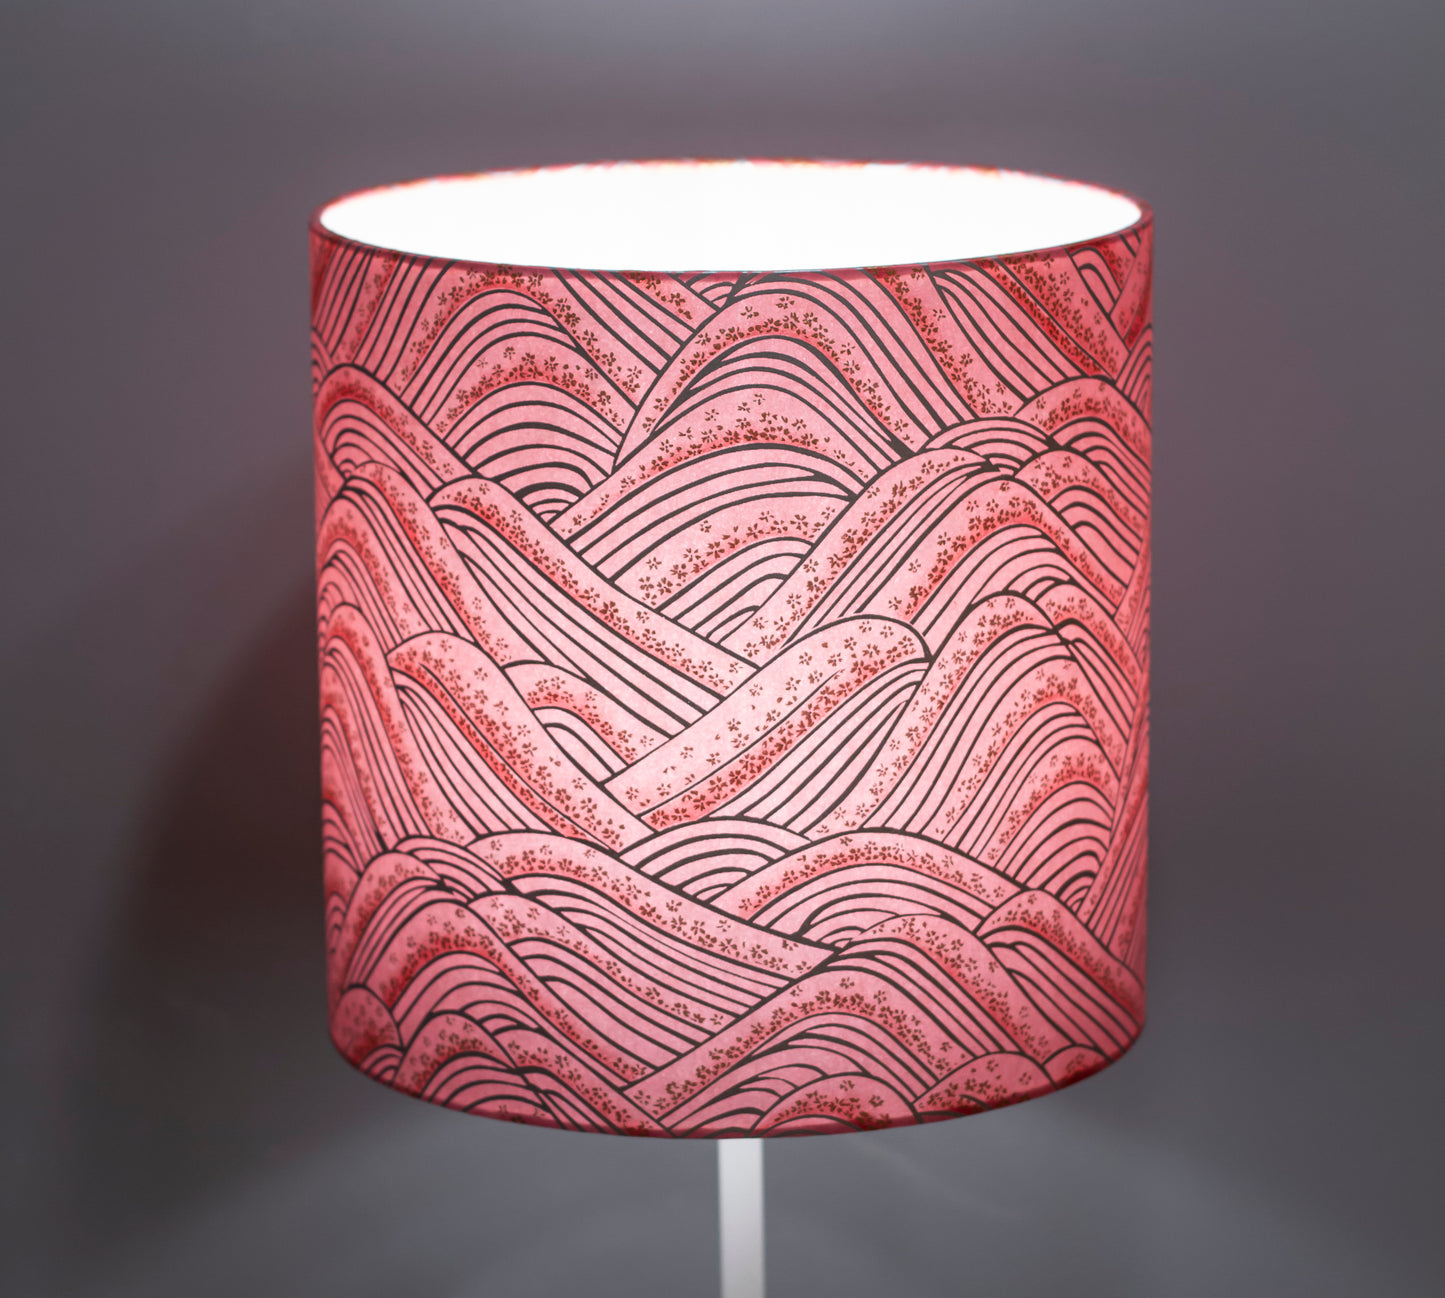 3 Tier Lamp Shade - W04 - Pink Hills with Gold Flowers, 50cm x 20cm, 40cm x 17.5cm & 30cm x 15cm